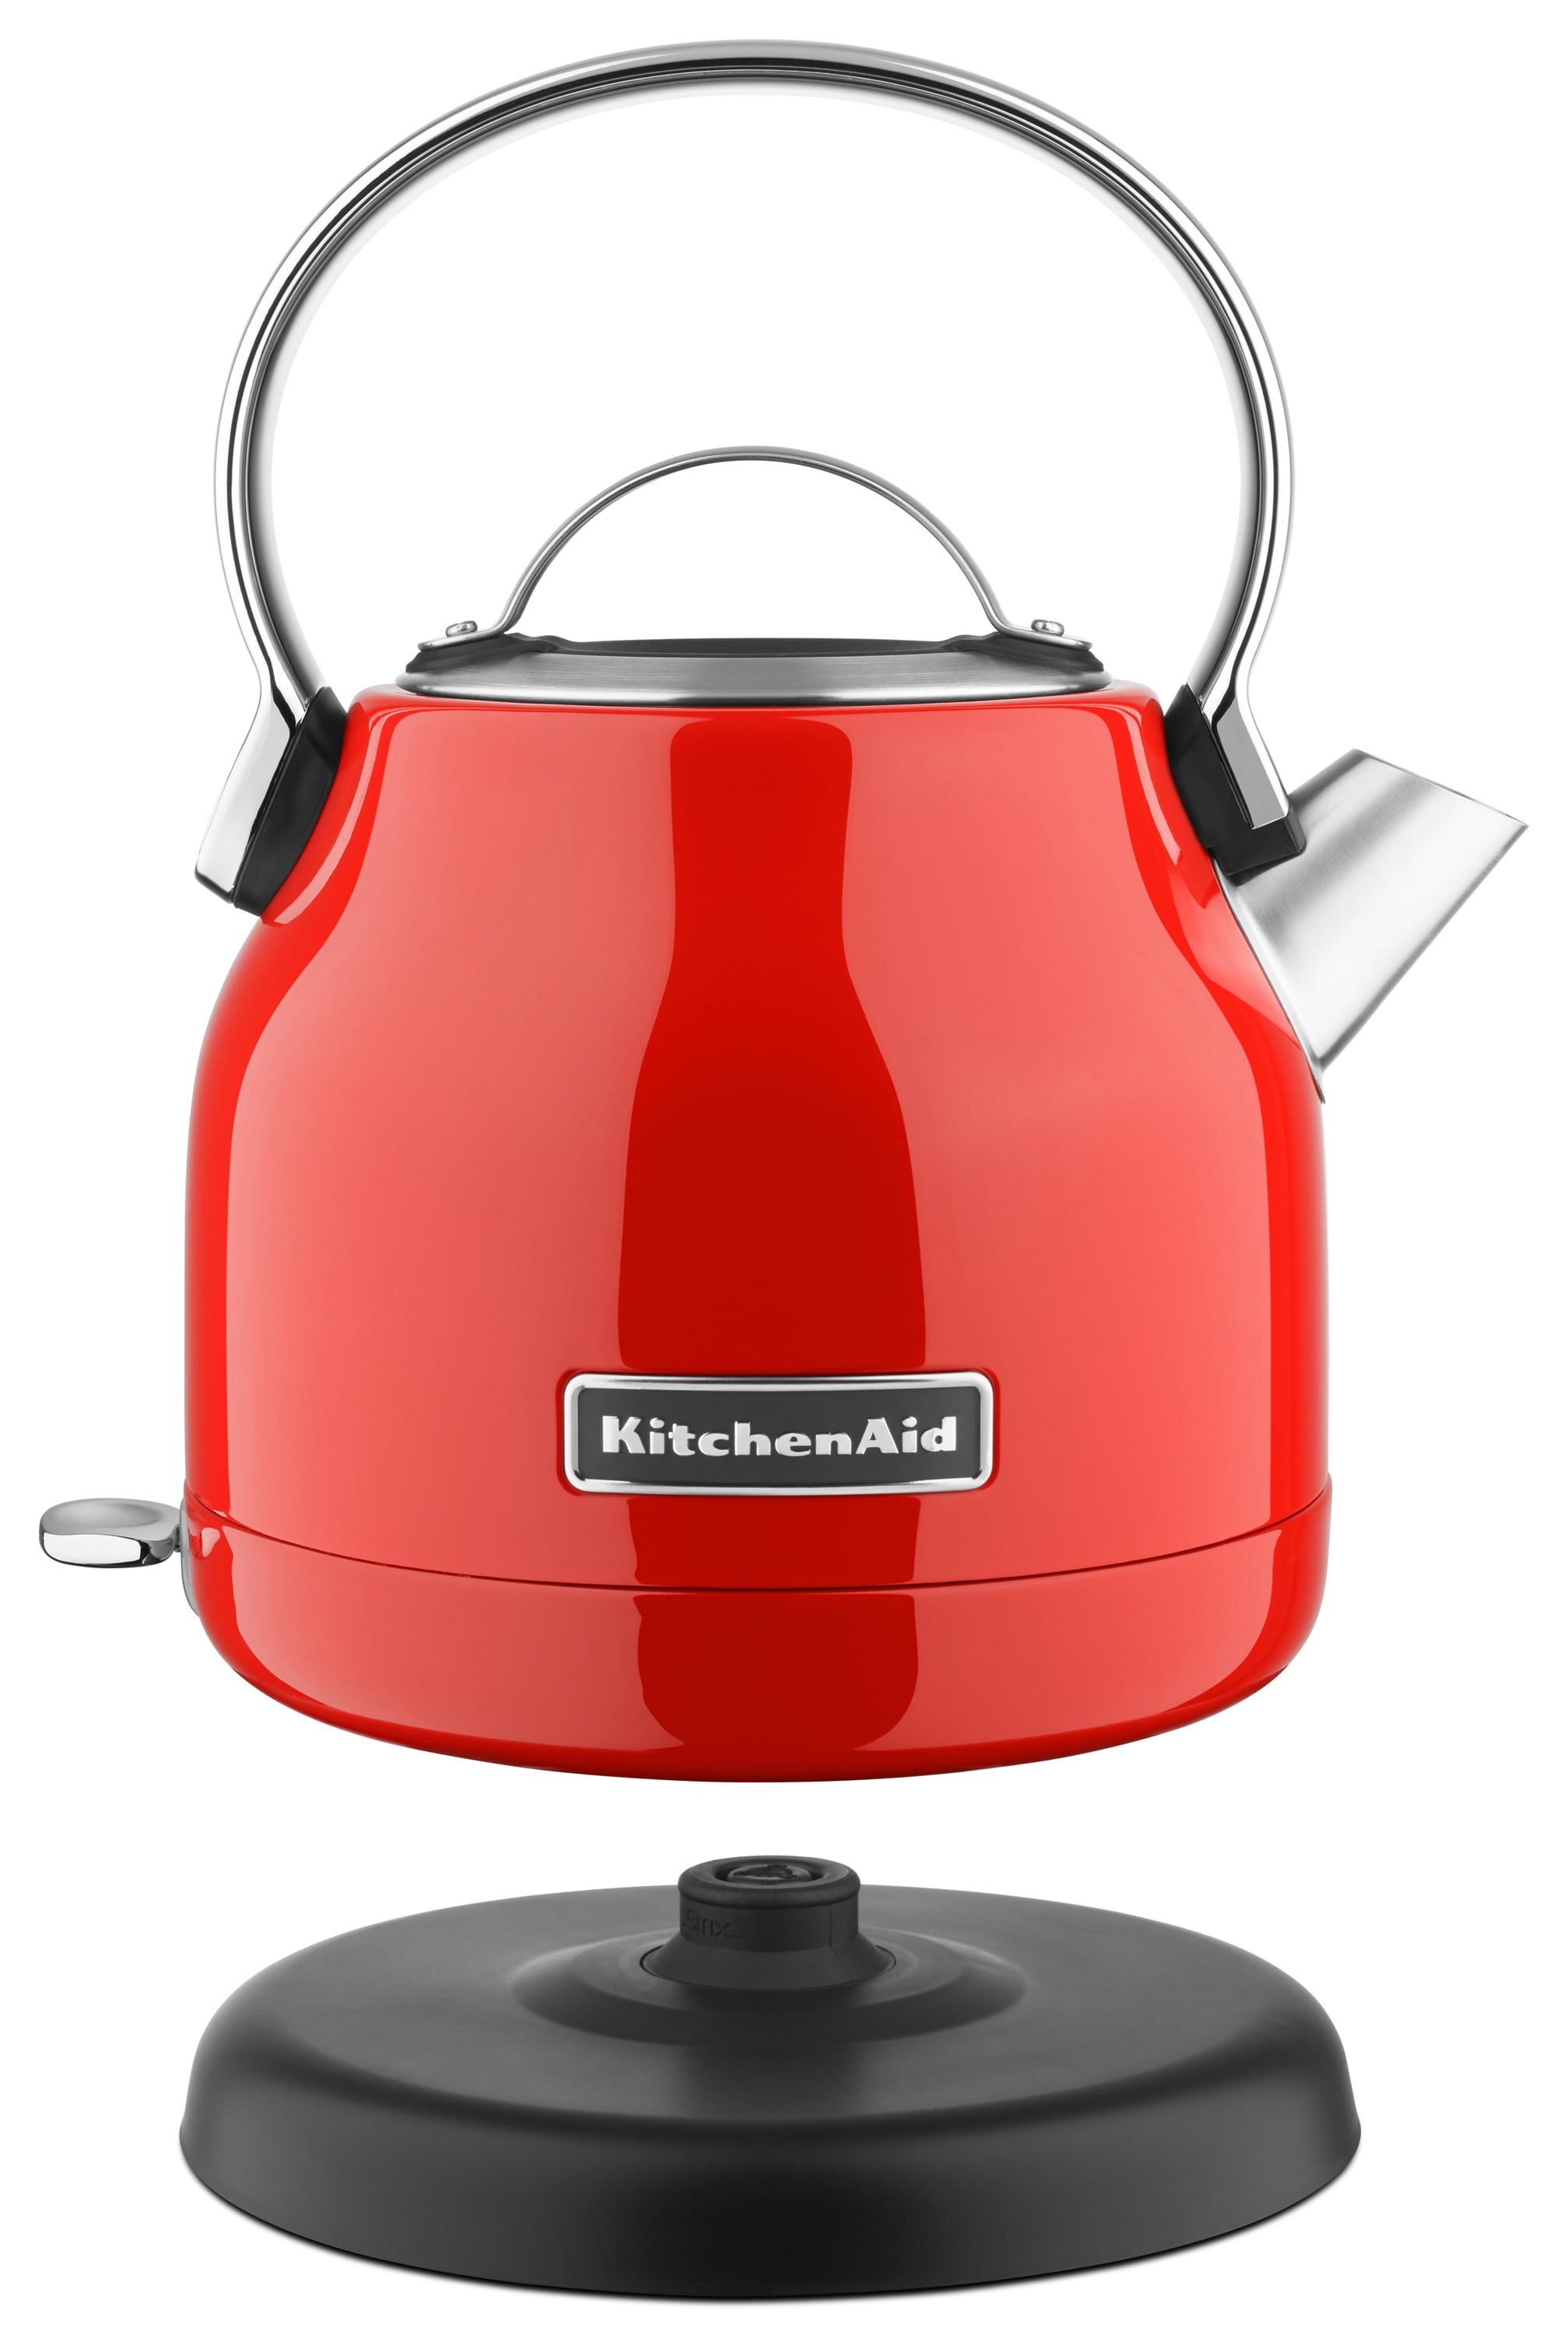 KitchenAid 5KEK1722 - electric kettles 220 VOLTS NOT FOR USA